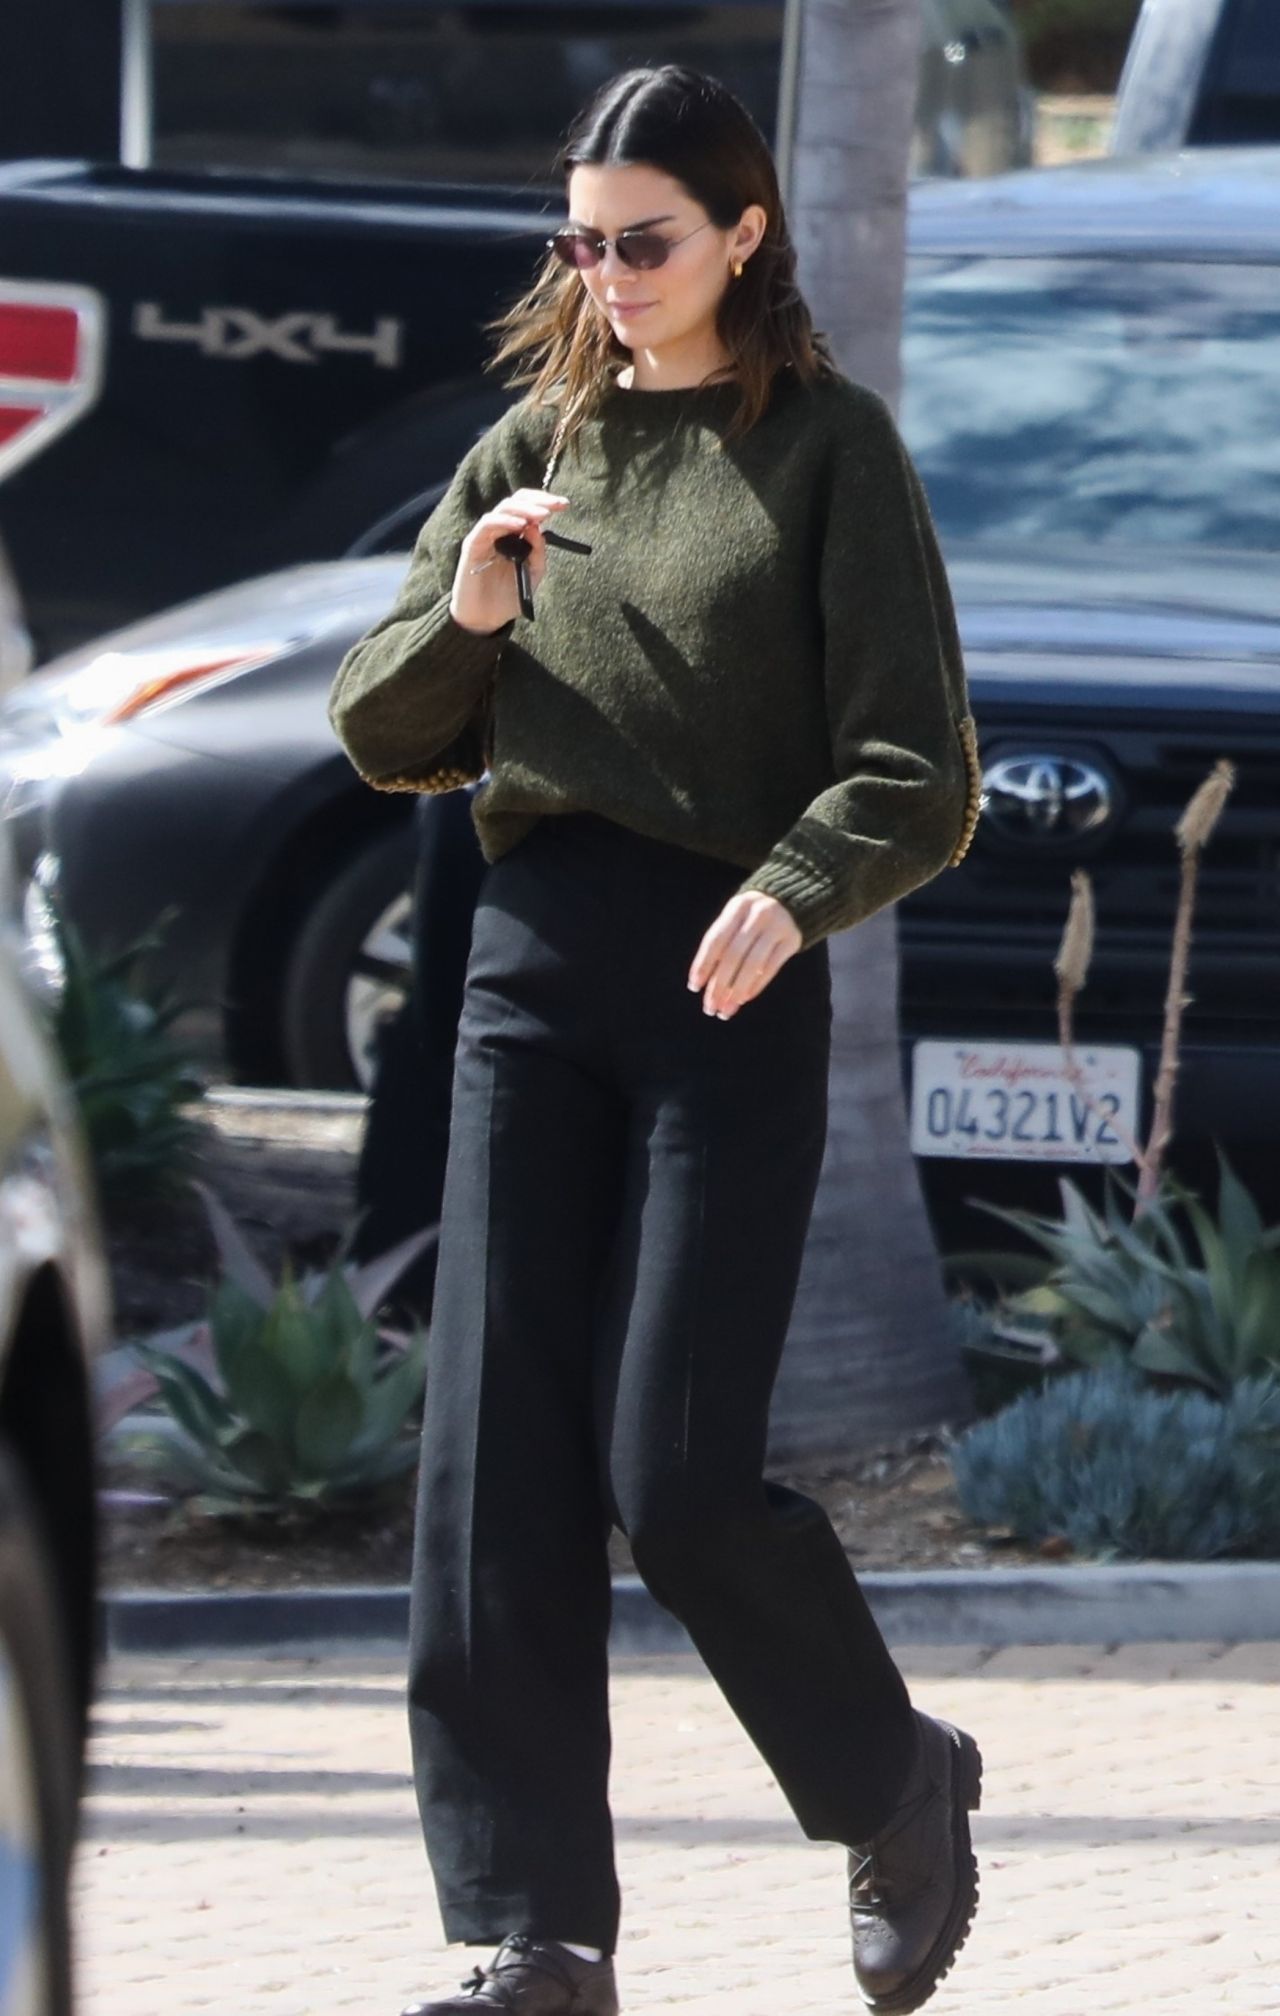 Kendall Jenner Malibu October 12, 2020 – Star Style